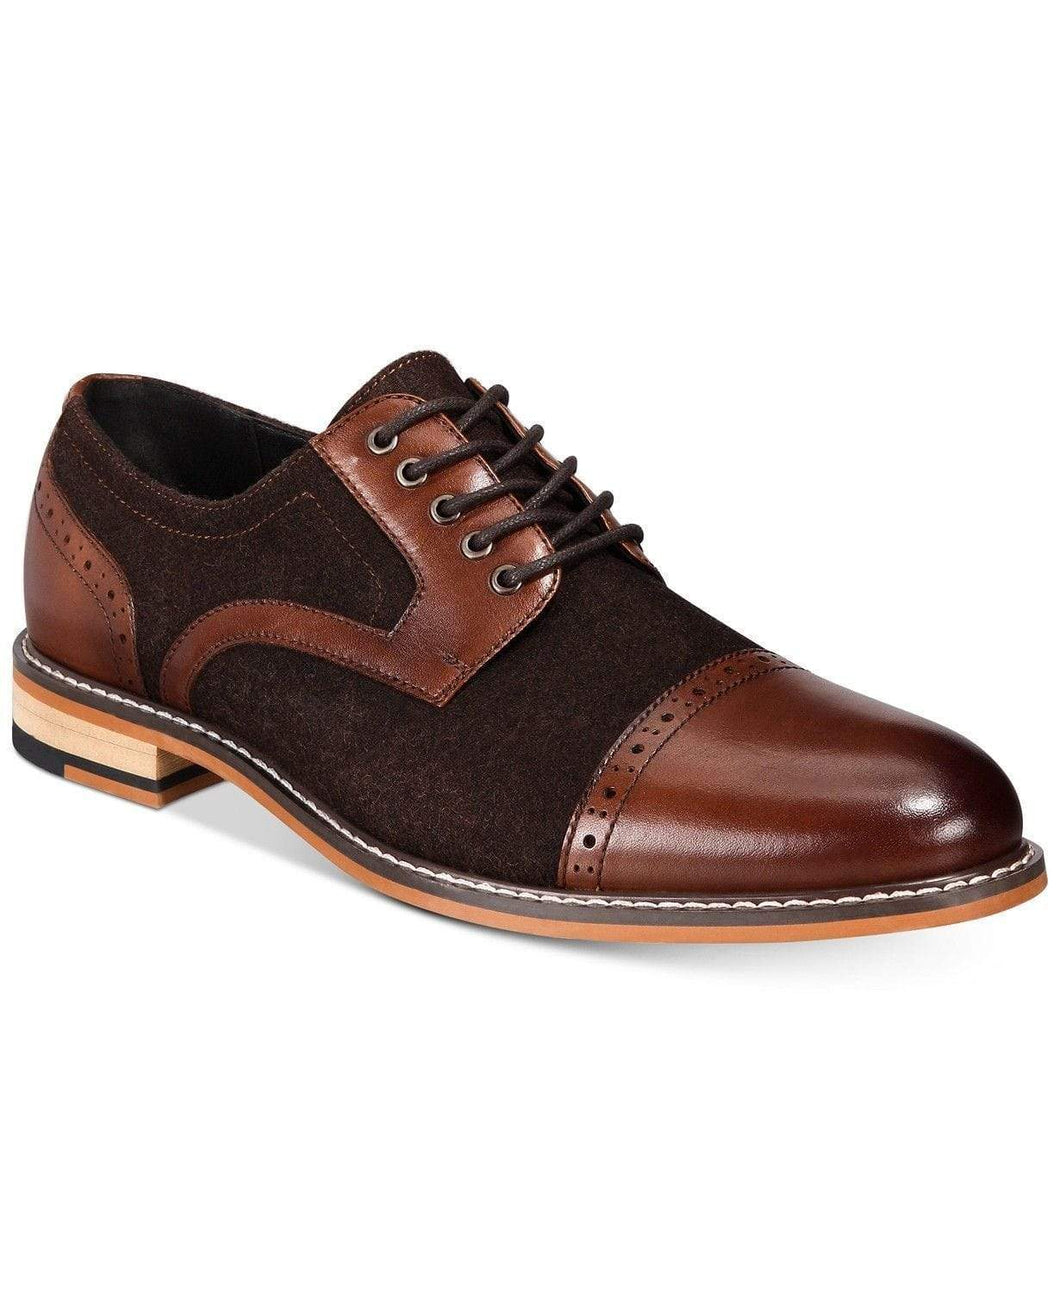 Handmade Brown Leather Suede Cap Toe Lace Up Shoe - leathersguru